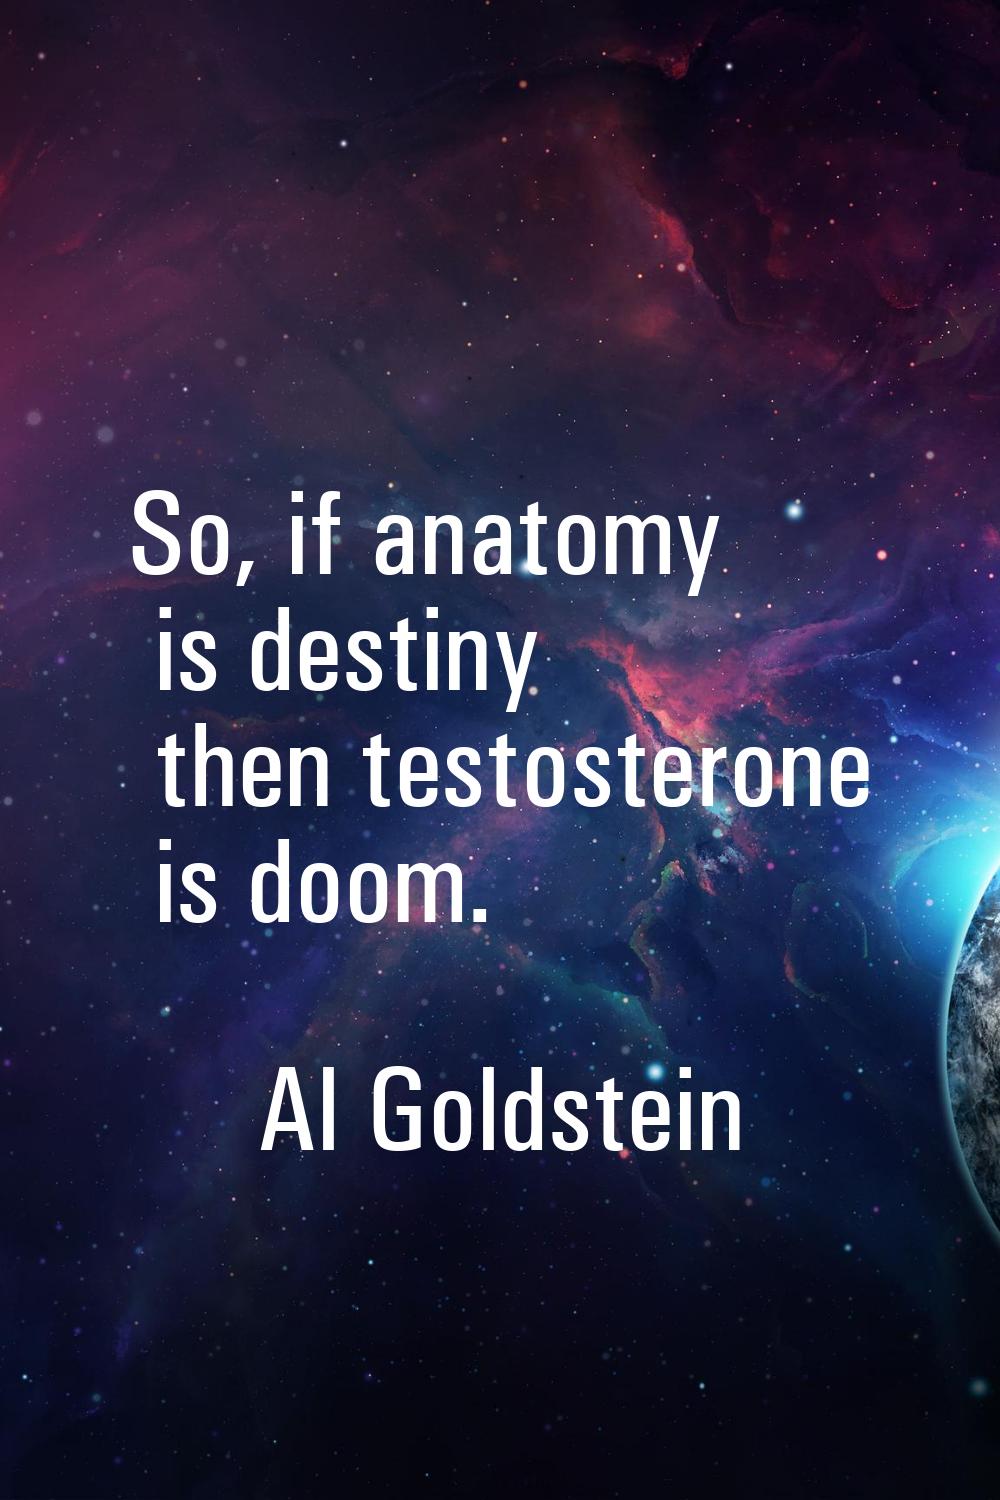 So, if anatomy is destiny then testosterone is doom.